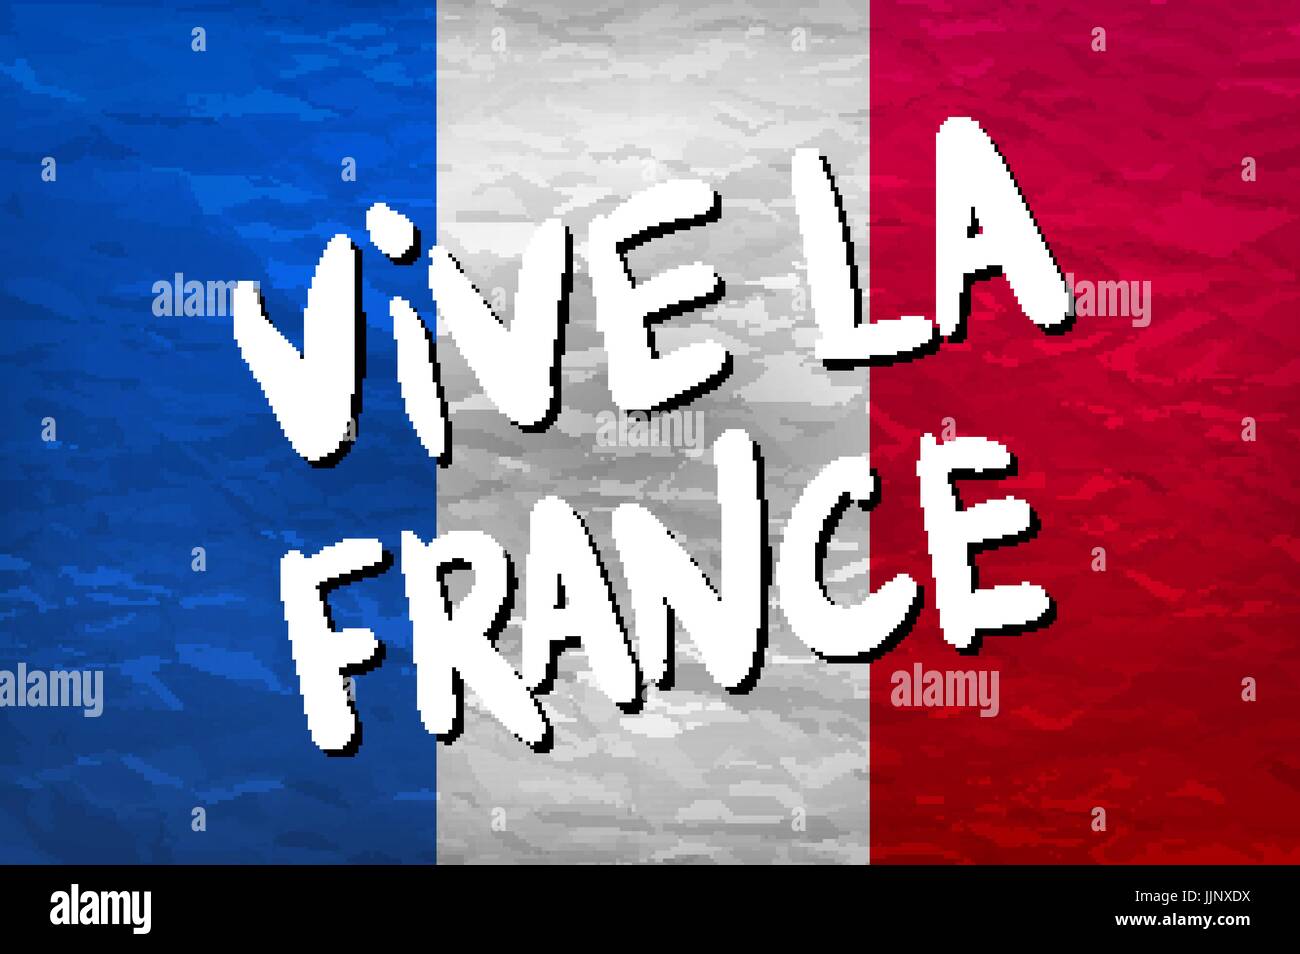 Vive la France hand painted national flag vector art Stock Vector Image ...